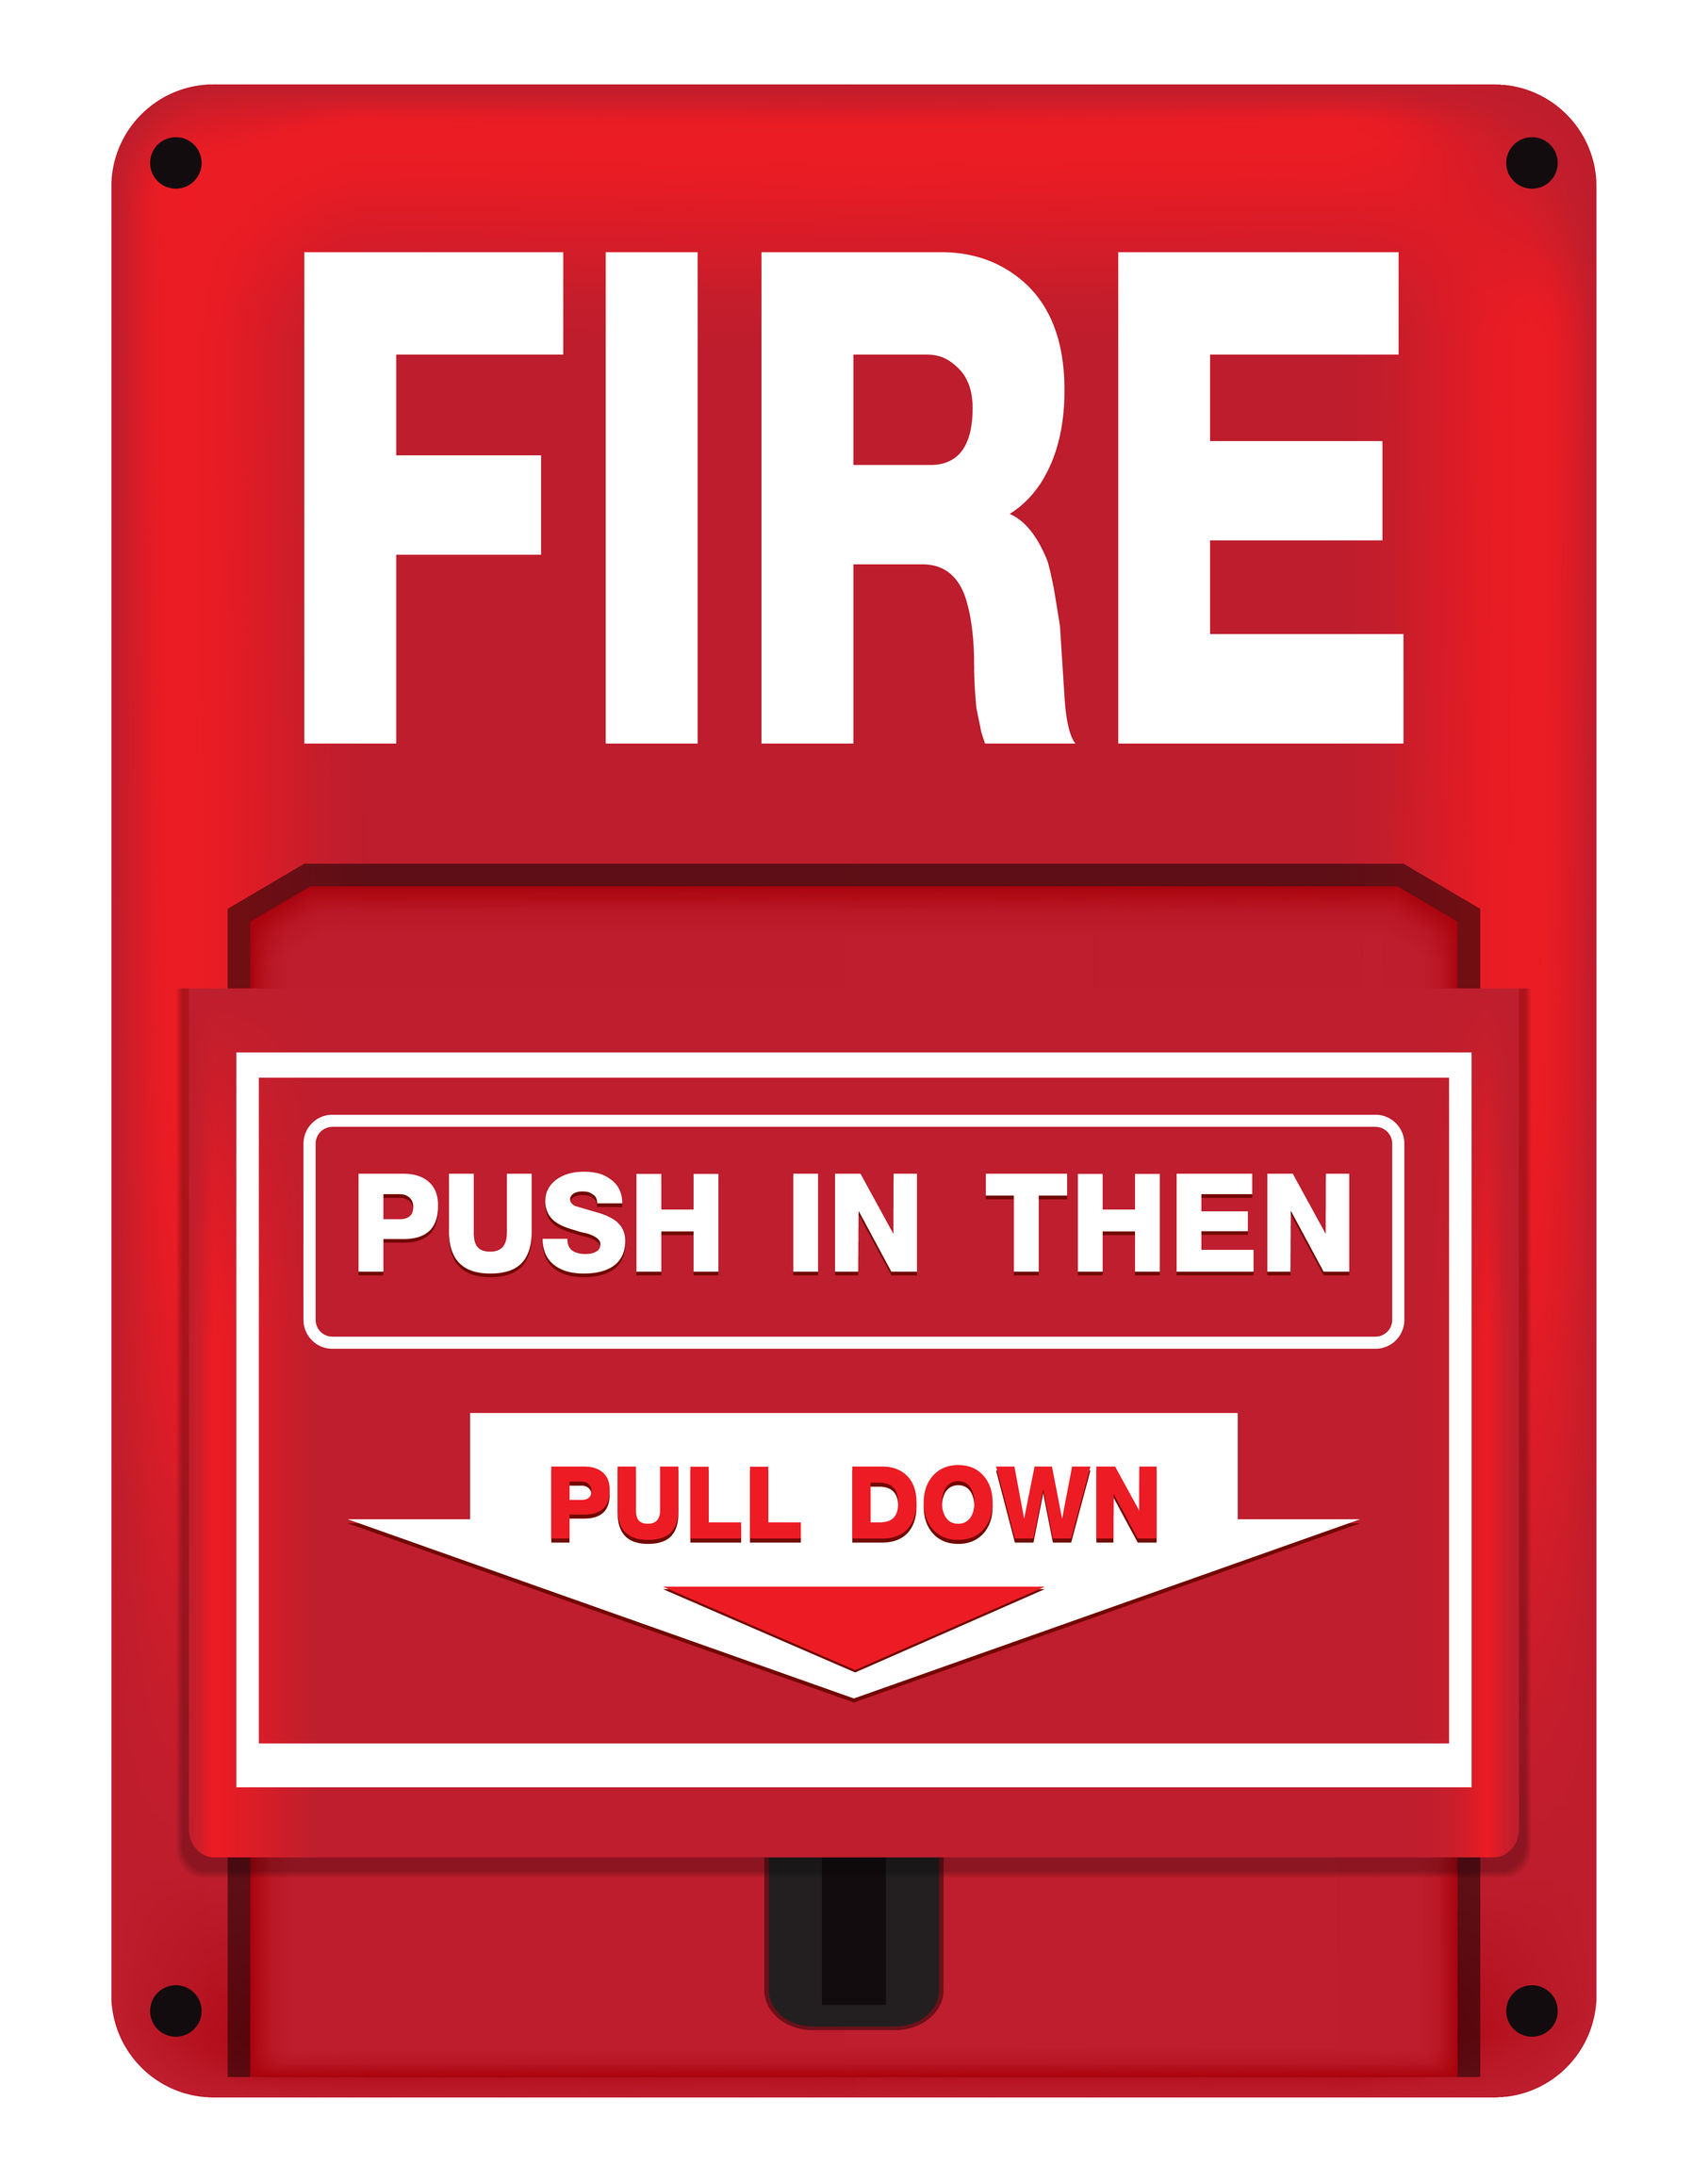 fire alarm clip art